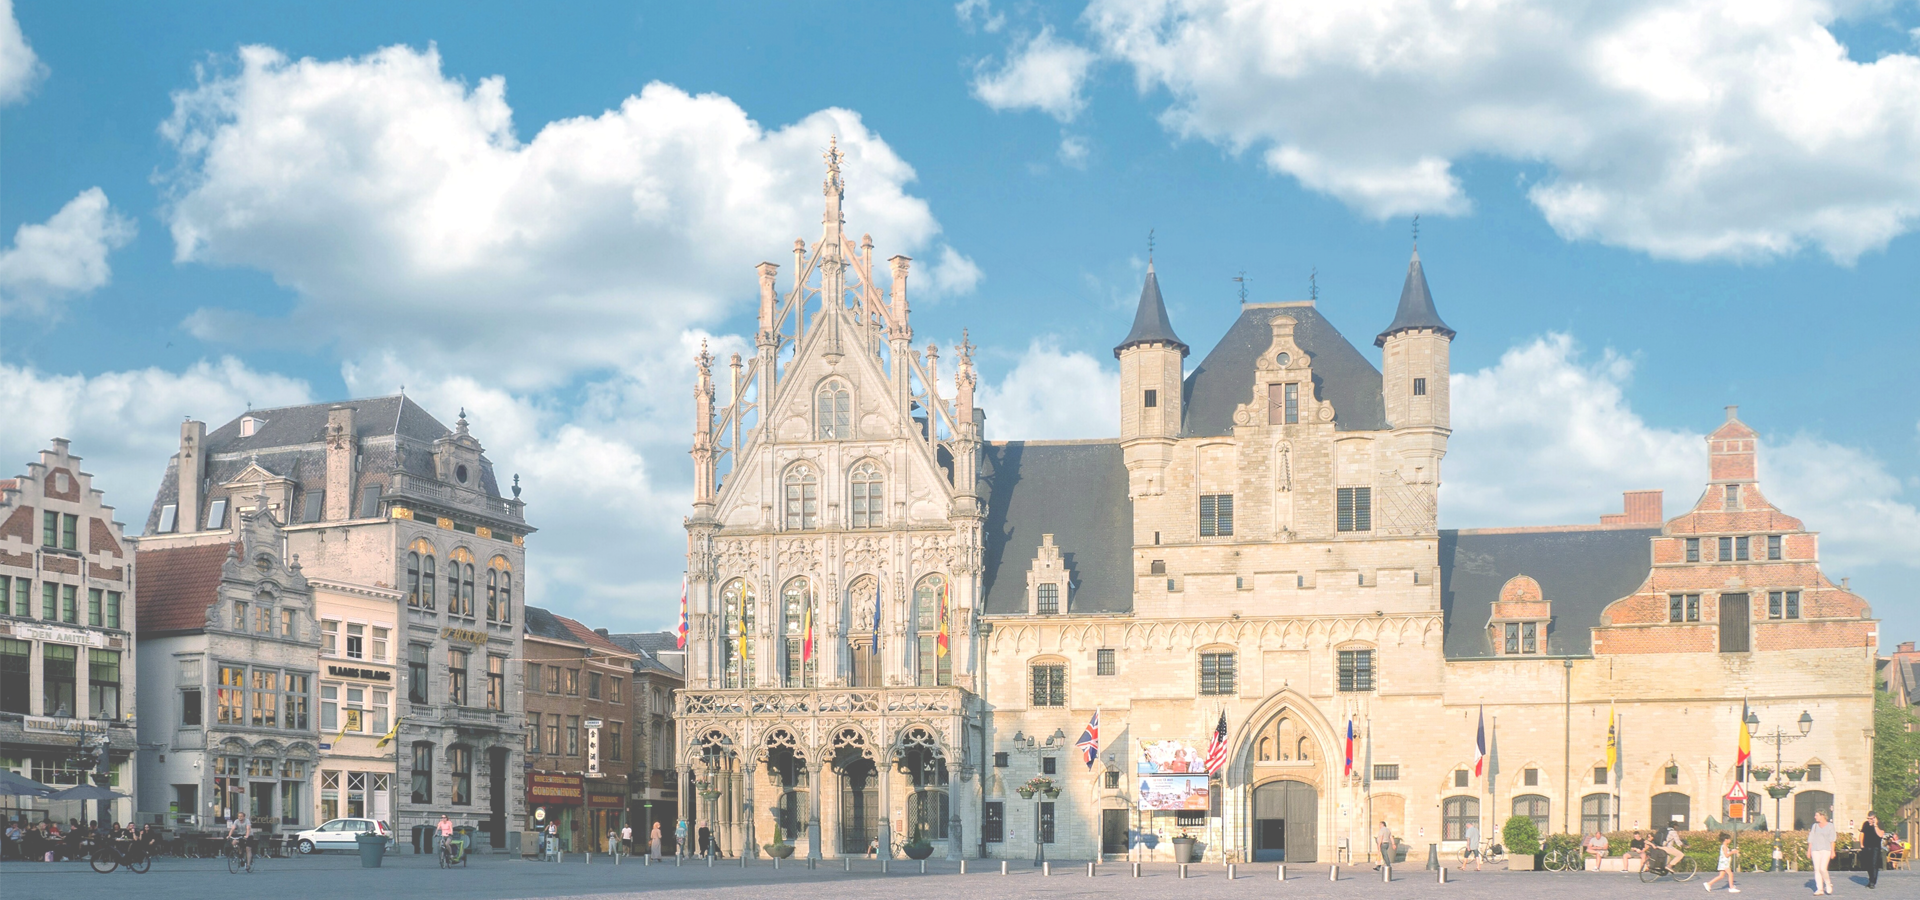 <b>Mechelen, Antwerp Province, The Flemish Region, Belgium</b>